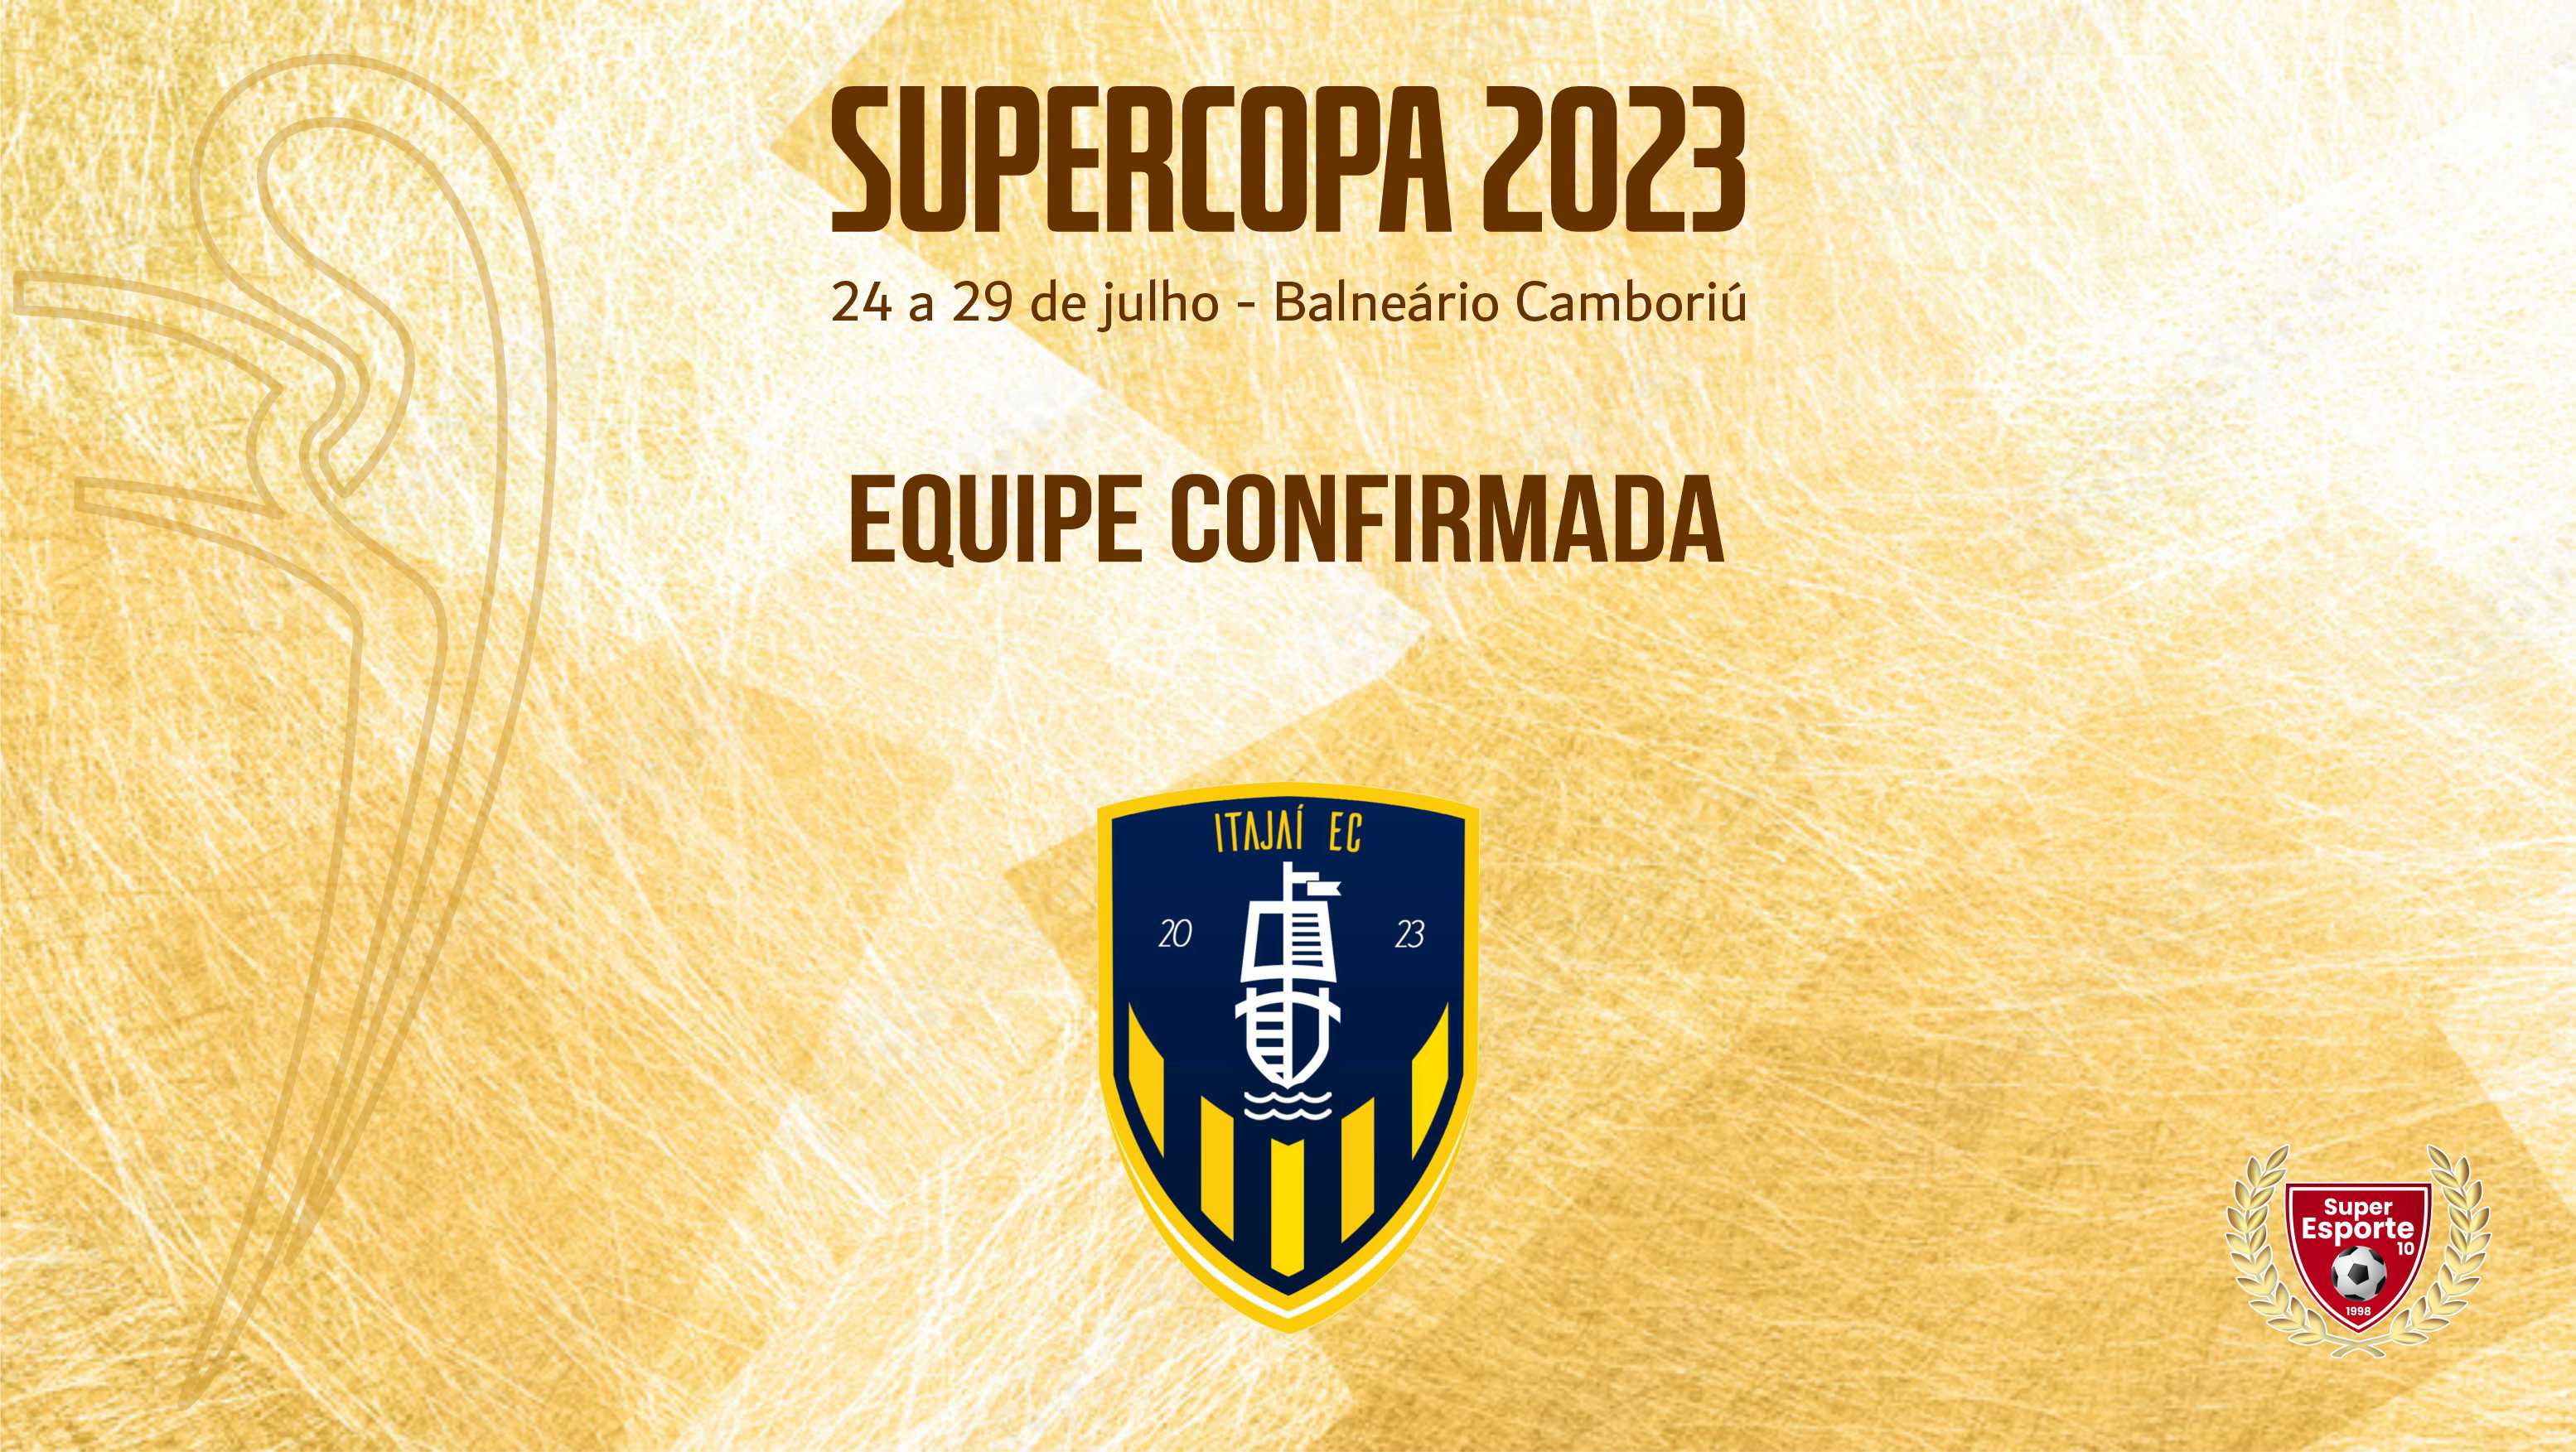 Itajaí Esporte Clube jogará a Supercopa